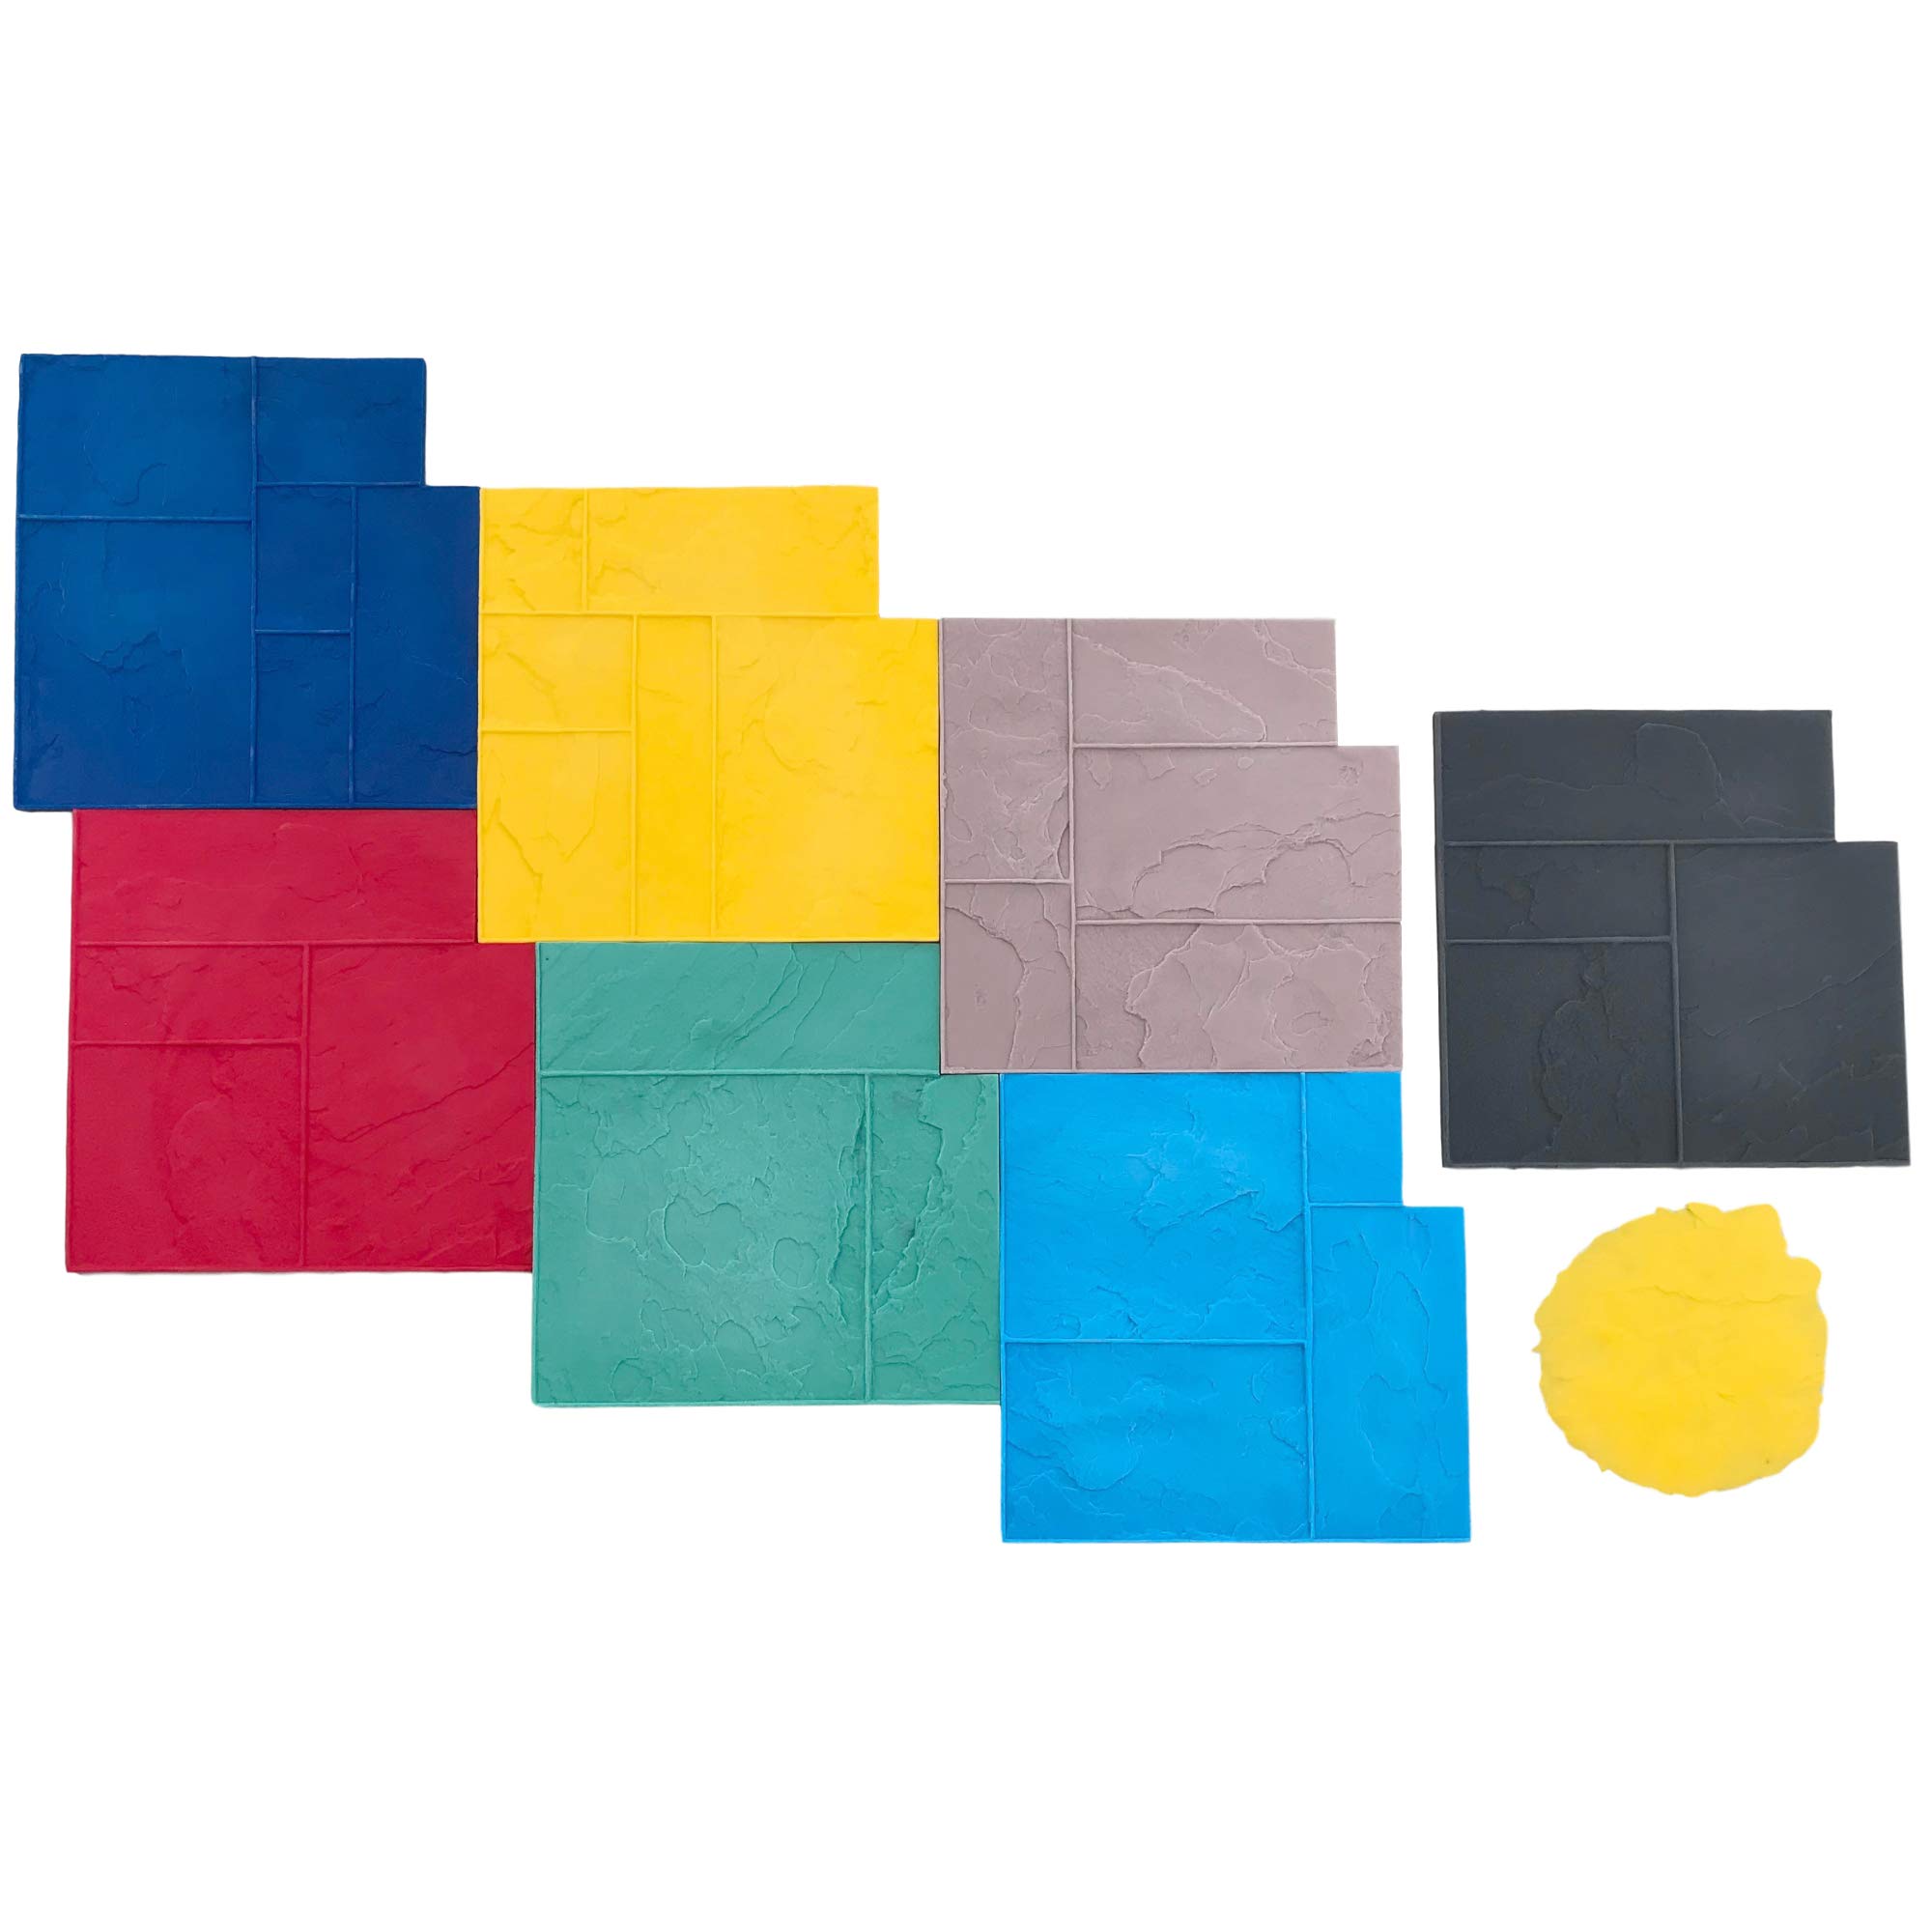 Ashler Notched Slate Concrete Stamp Set by Walttools | Decorative Tile Pattern Polyurethane Texturing Mats, Sturdy, Realistic Detail (8 Piece)